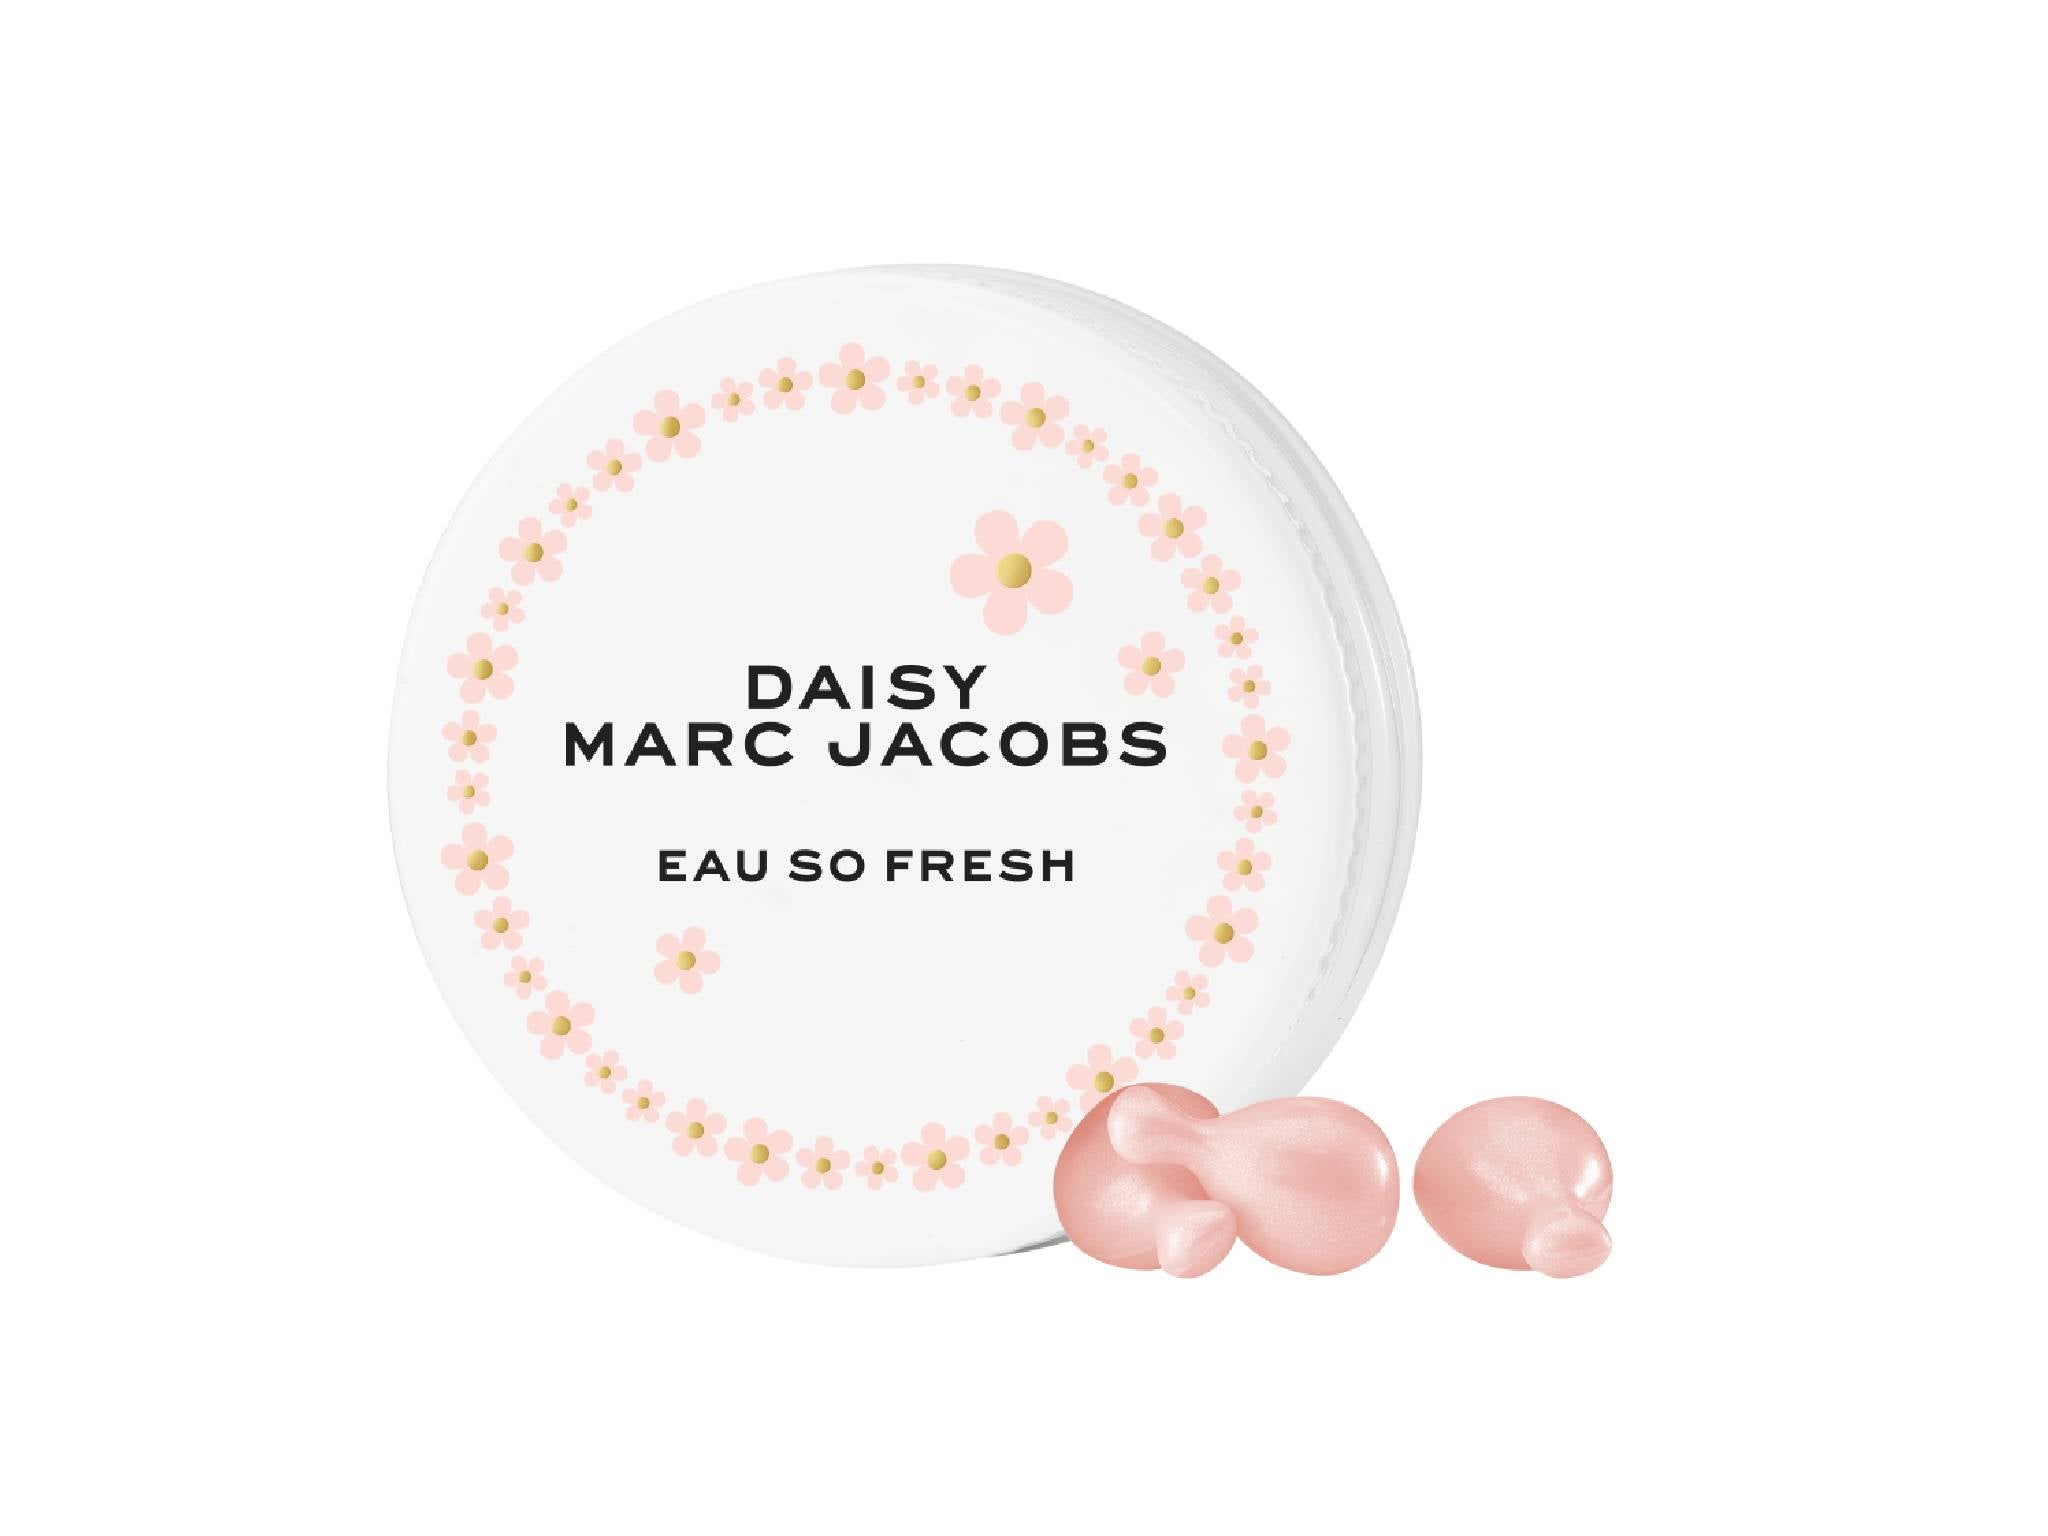 Marc Jacobs daisy drops, eau so fresh.jpg